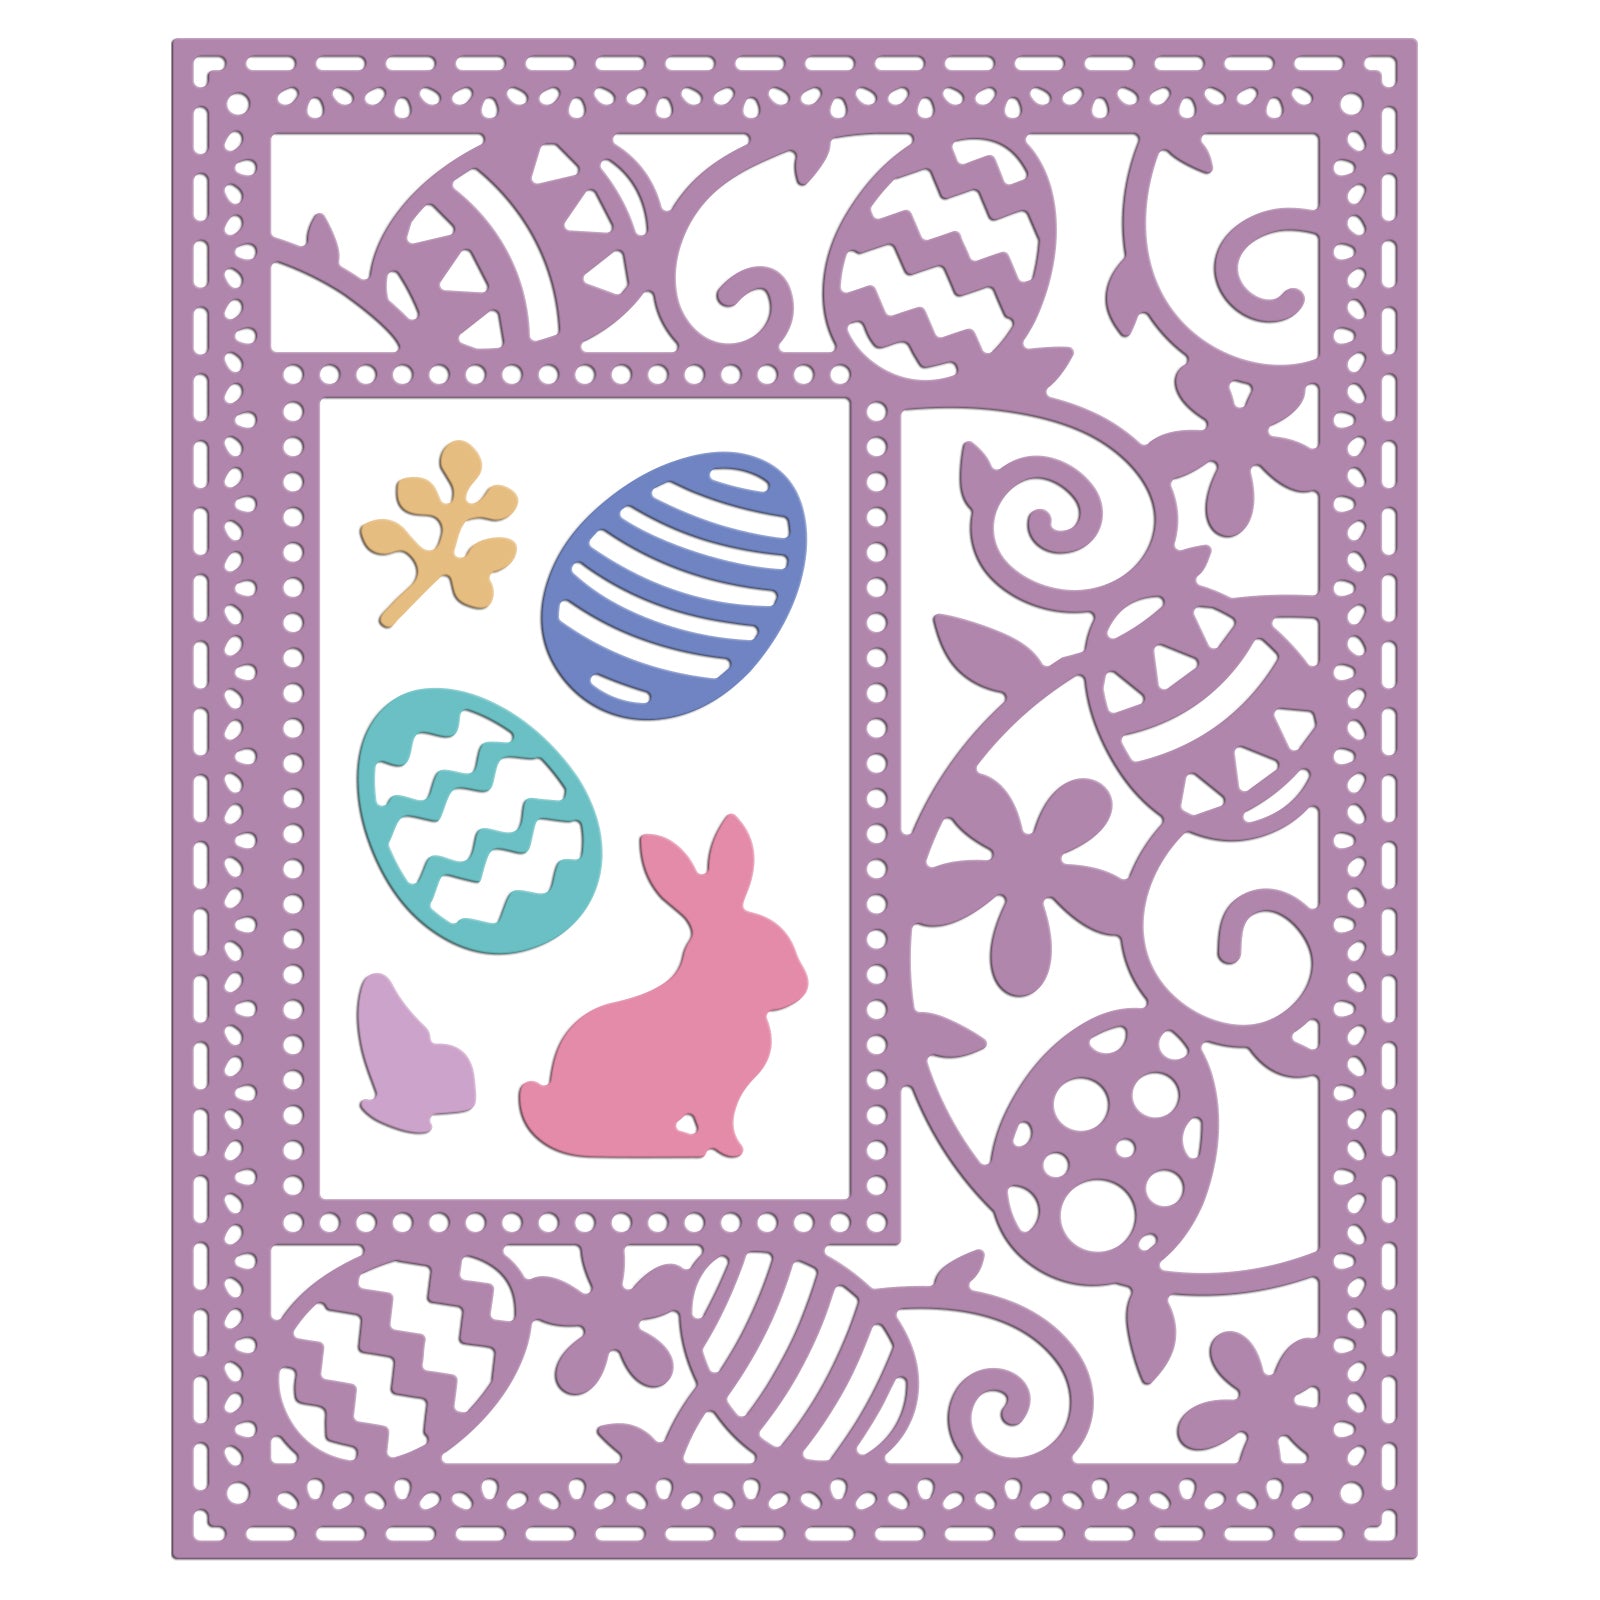 Globleland Easter, Bunny, Eggs, Butterflies, Plants, Flowers Carbon Steel Cutting Dies Stencils, for DIY Scrapbooking/Photo Album, Decorative Embossing DIY Paper Card